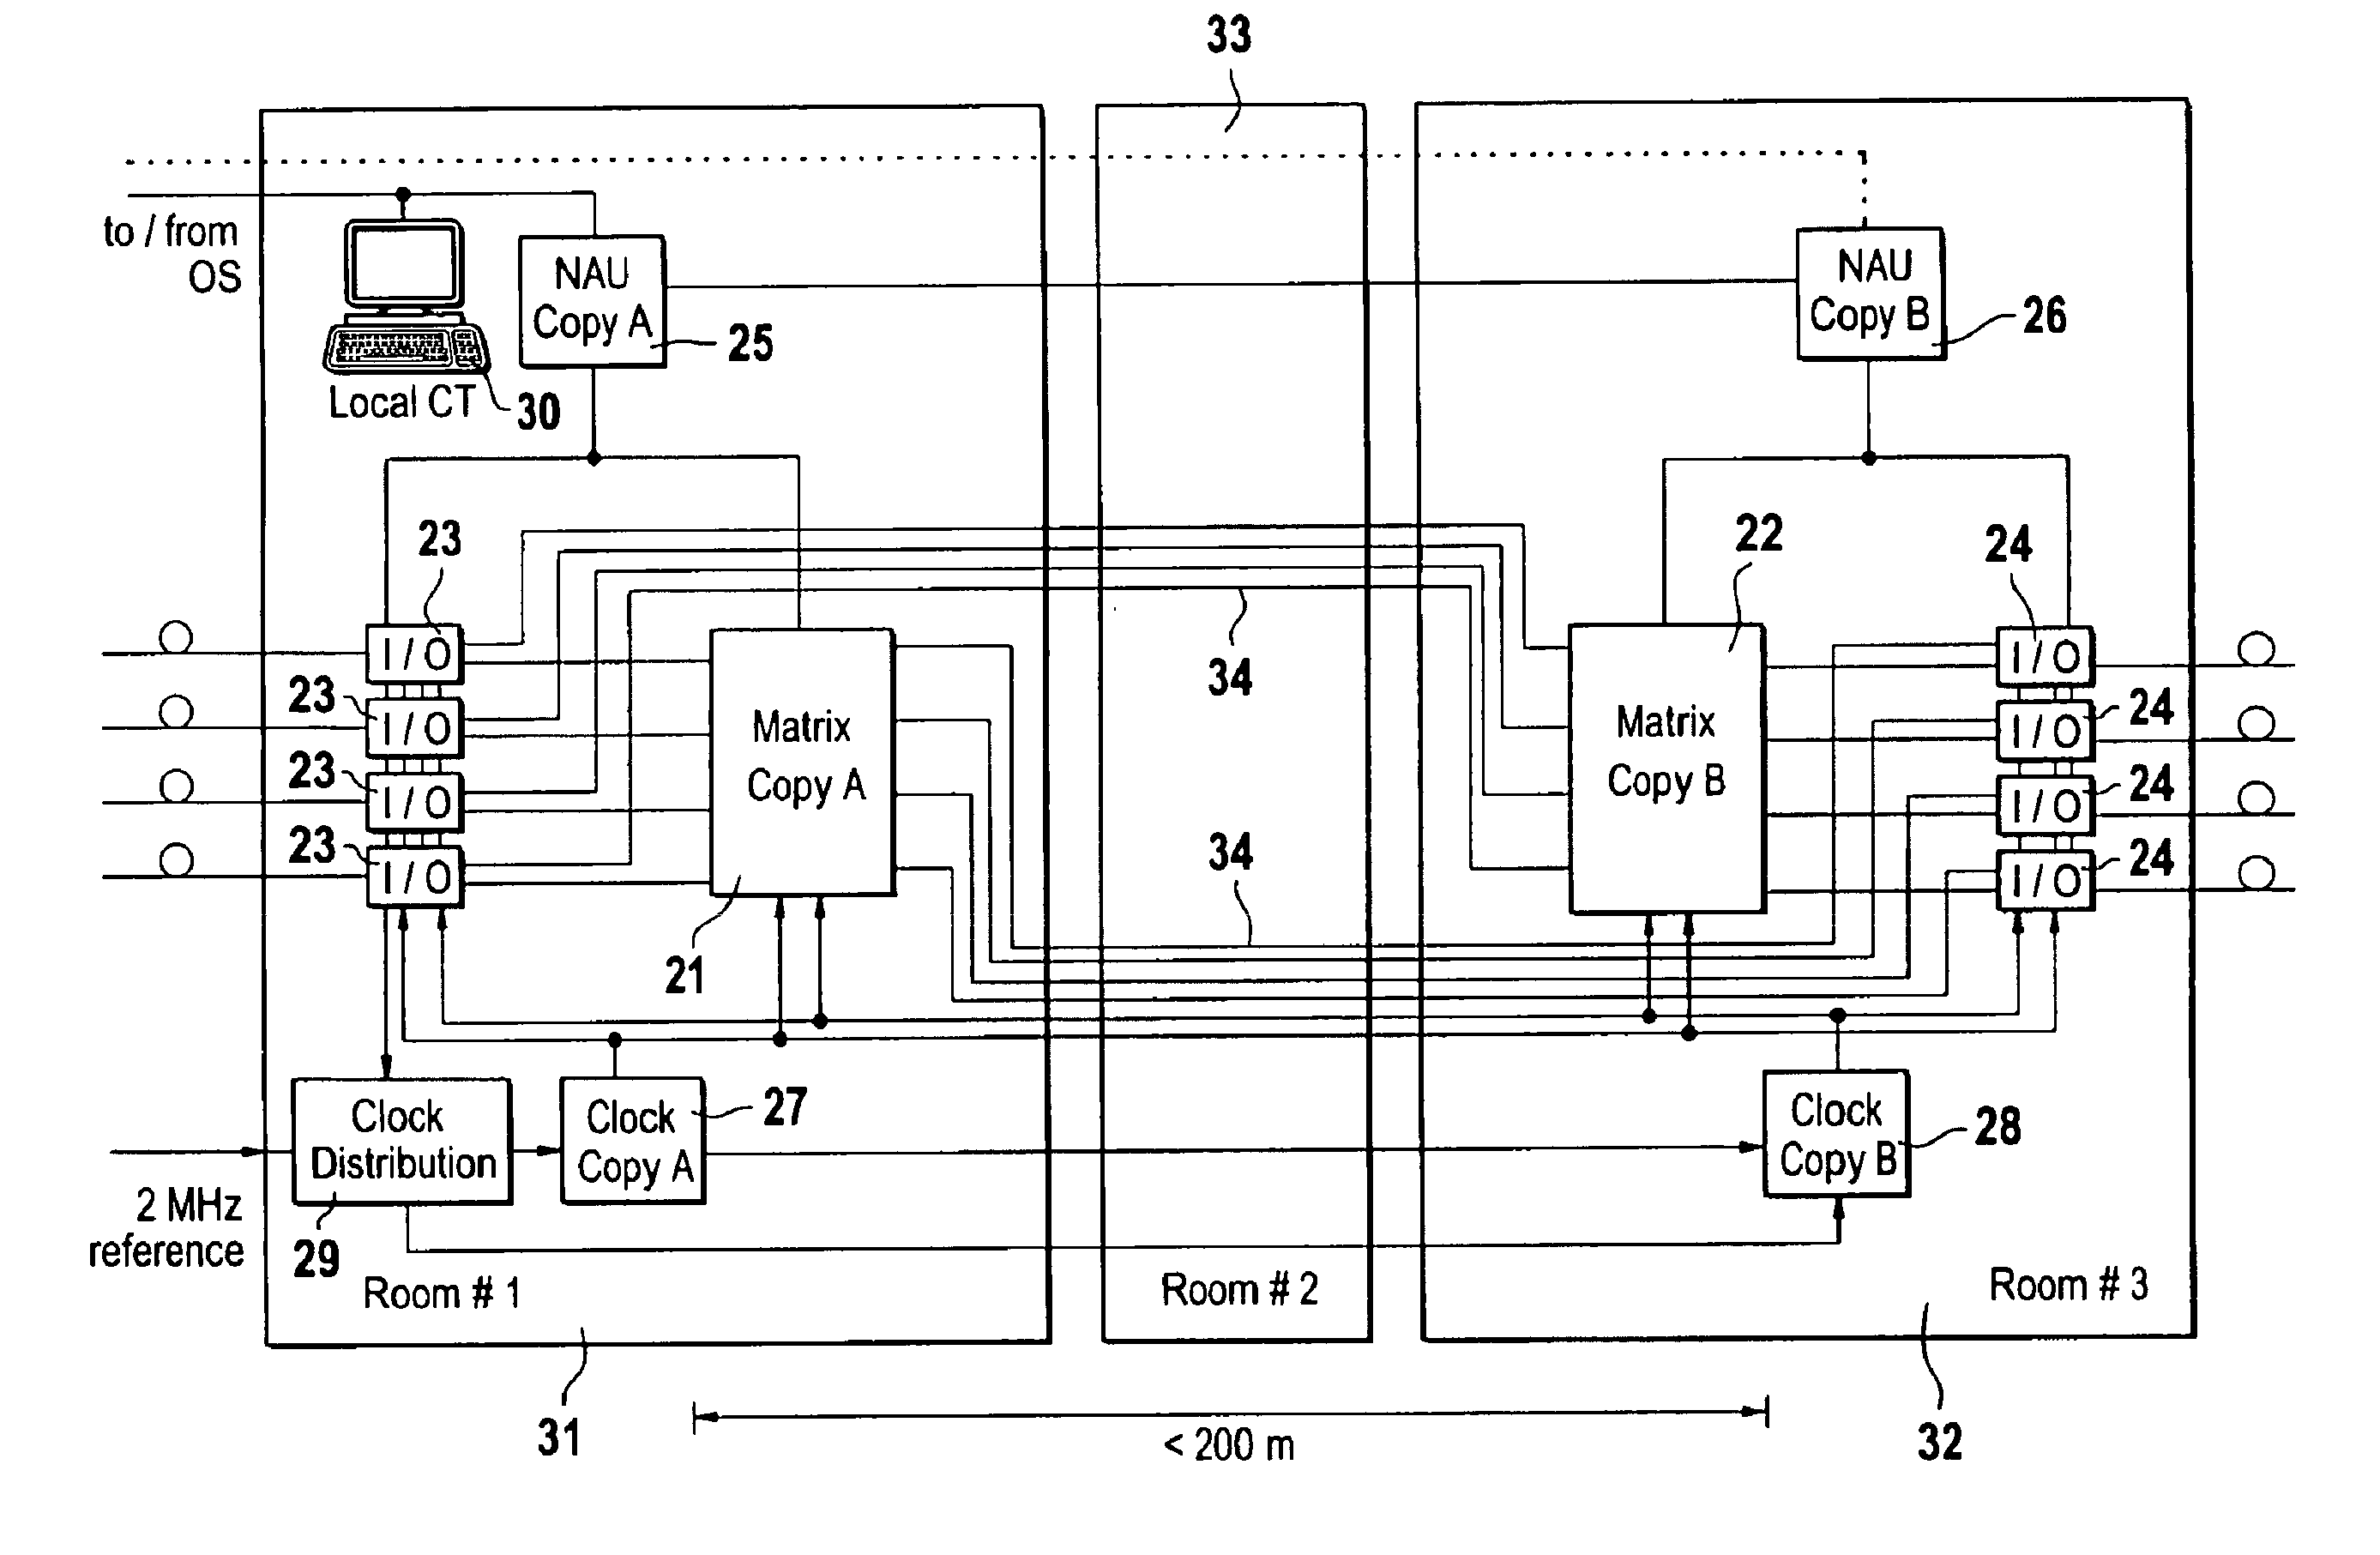 Network element with redundant switching matrix